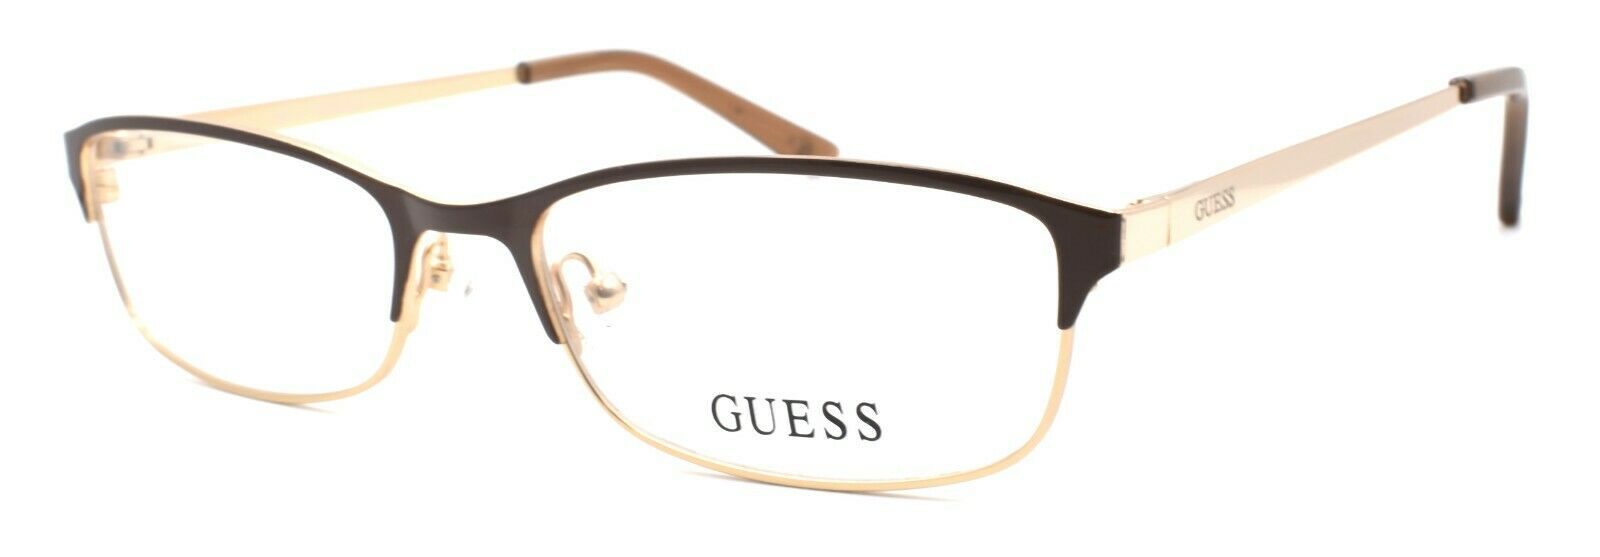 1-GUESS GU2544 045 Women's Eyeglasses Frames 52-17-135 Shiny Light Brown + CASE-664689748365-IKSpecs